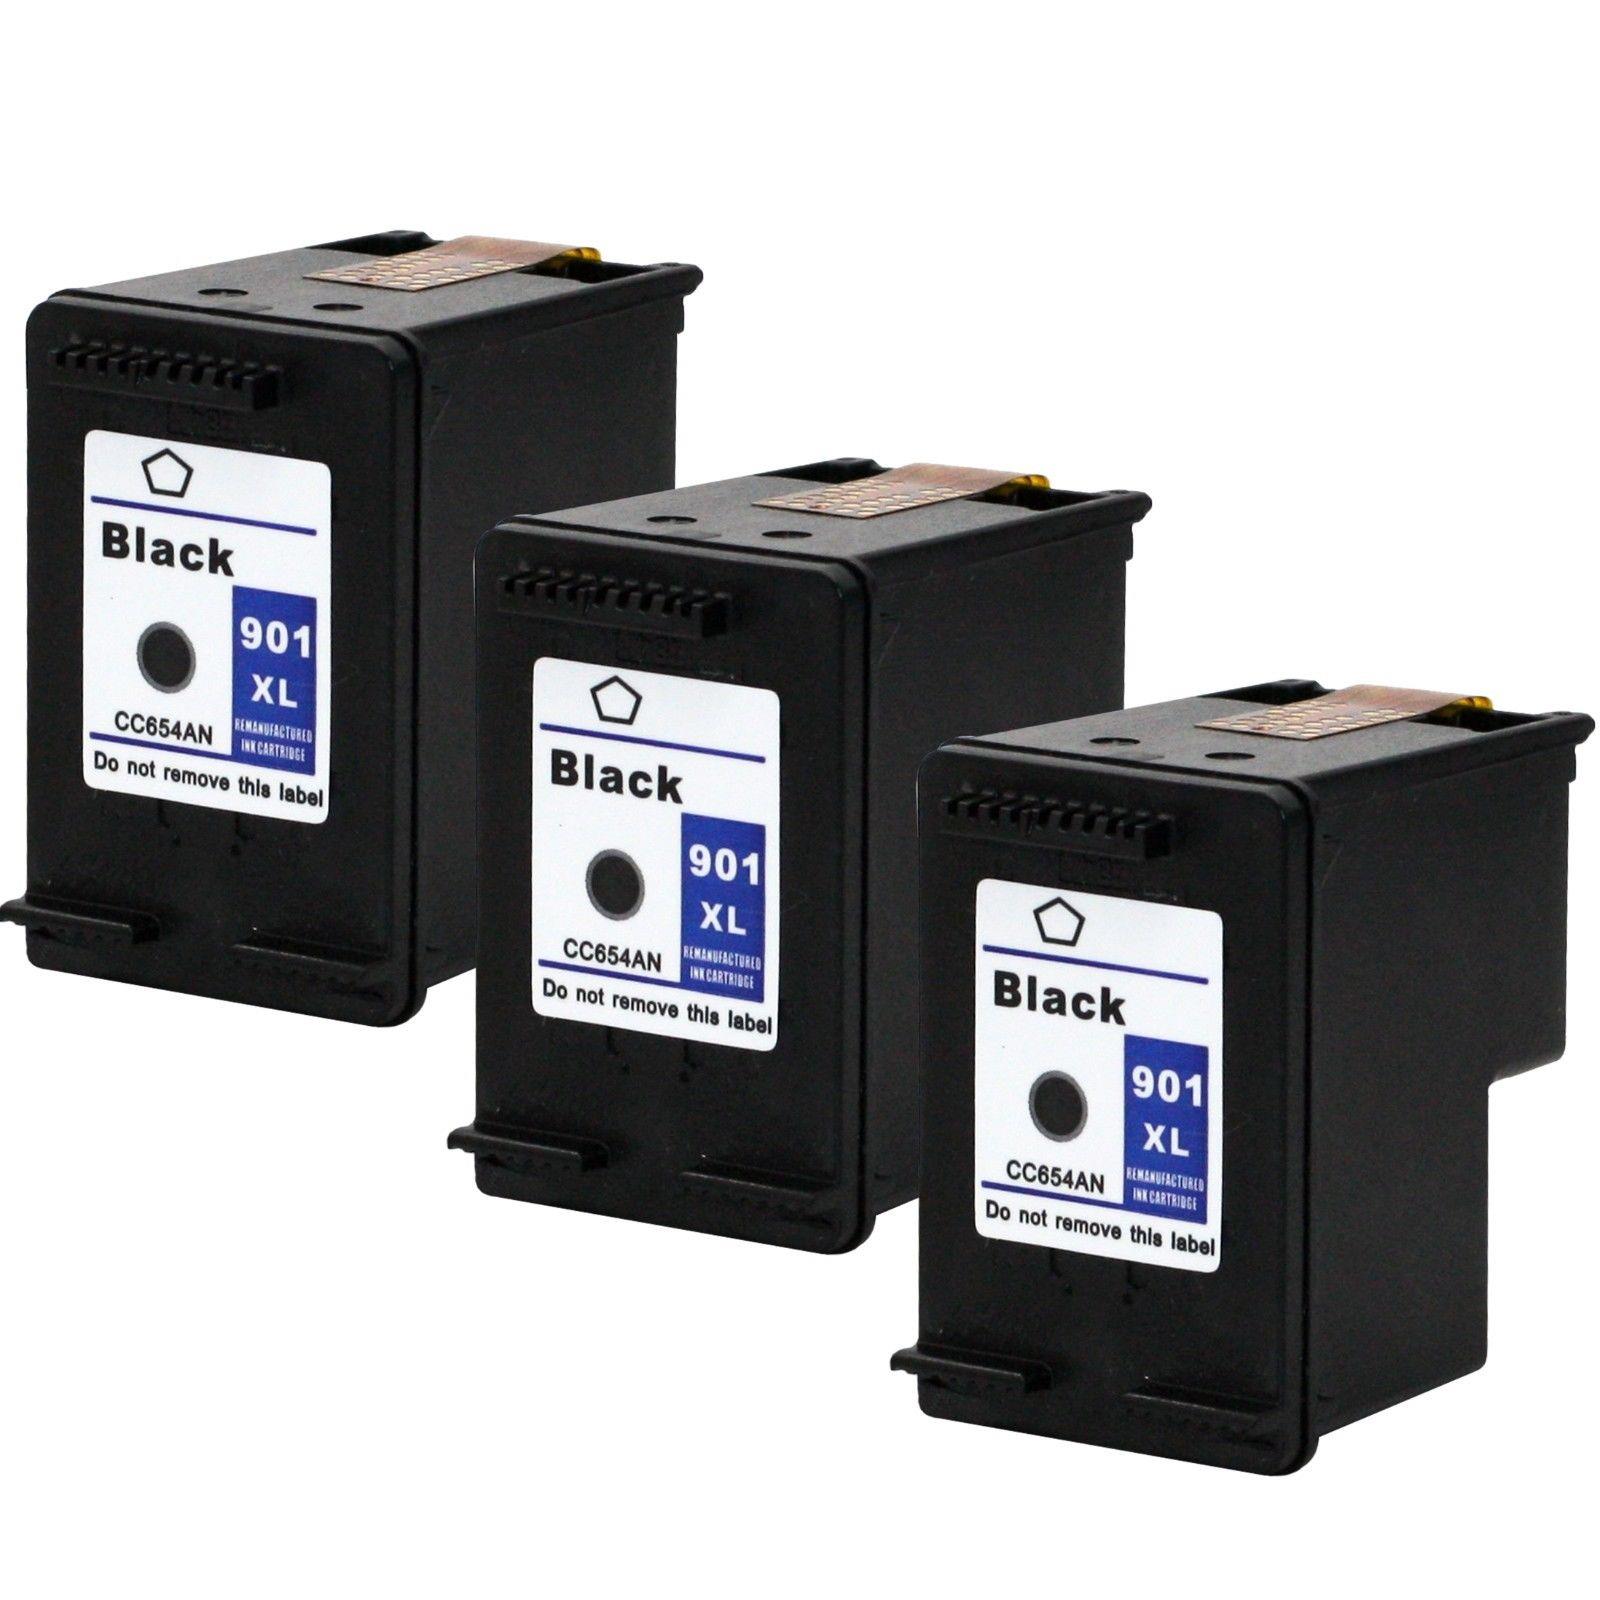 SL 3 Pk HP 901 XL Black Ink Cartridge For Officejet G510n J4640 J4680 4500 Printer